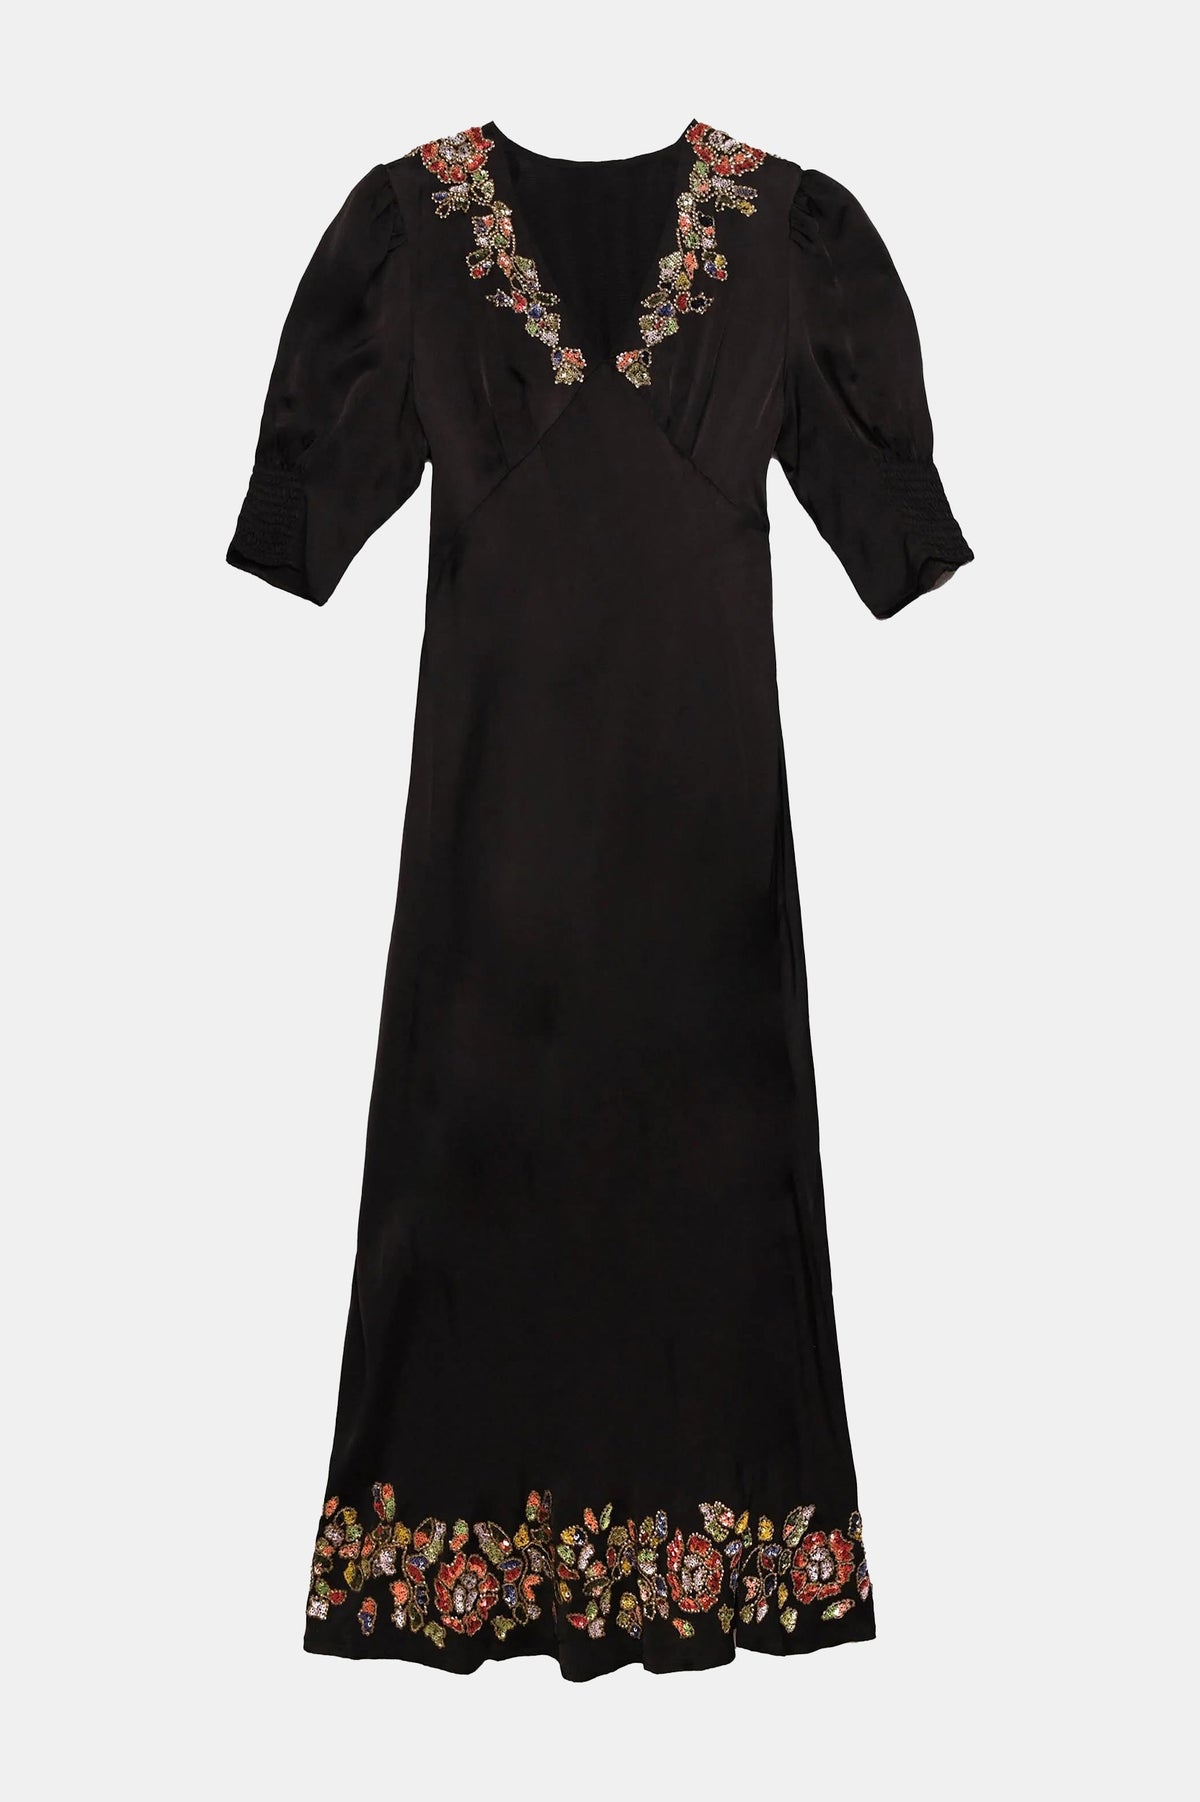 Zadie Embellished Dress in Waterblossom Black